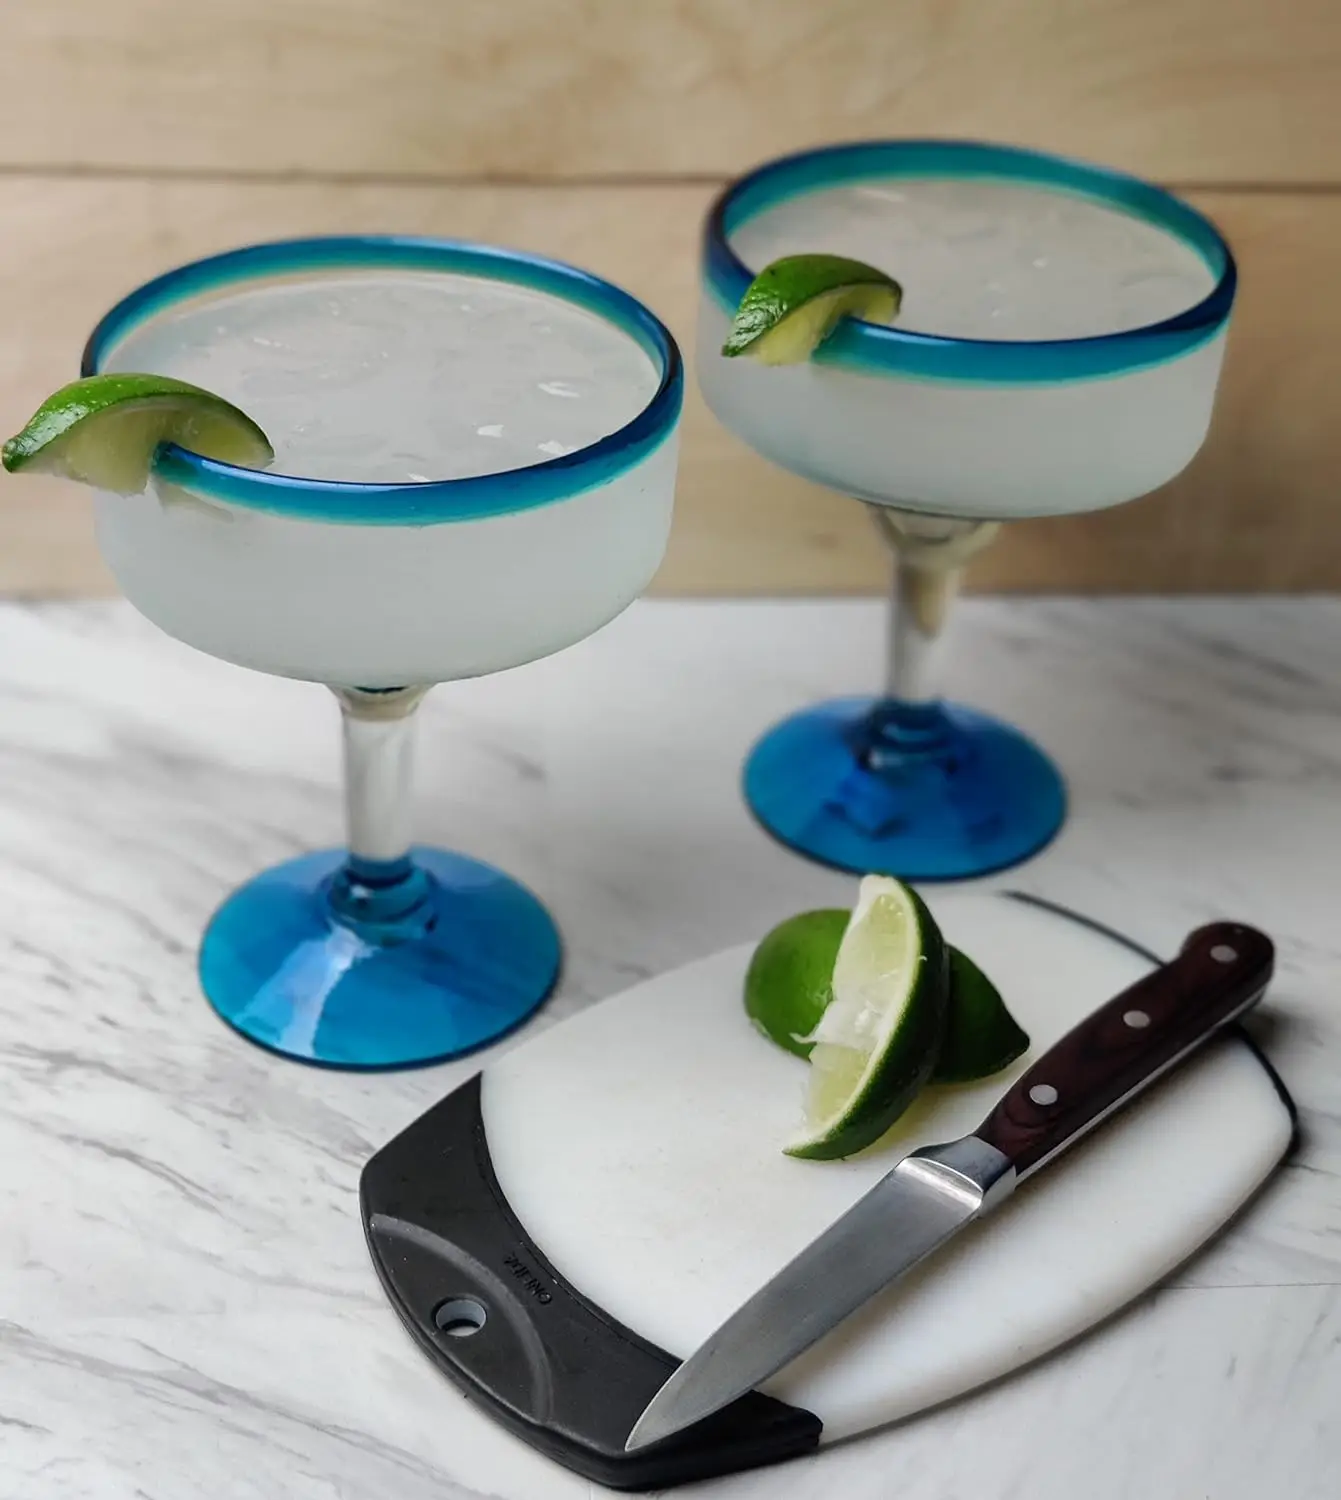 https://ae01.alicdn.com/kf/S7ad9baa6bdd24c39970a2834e23520b5i/Hand-Blown-Glass-u2013-Set-of-4-Hand-Blown-Margarita-Glasses-16-oz-with-Aqua-Blue.jpg